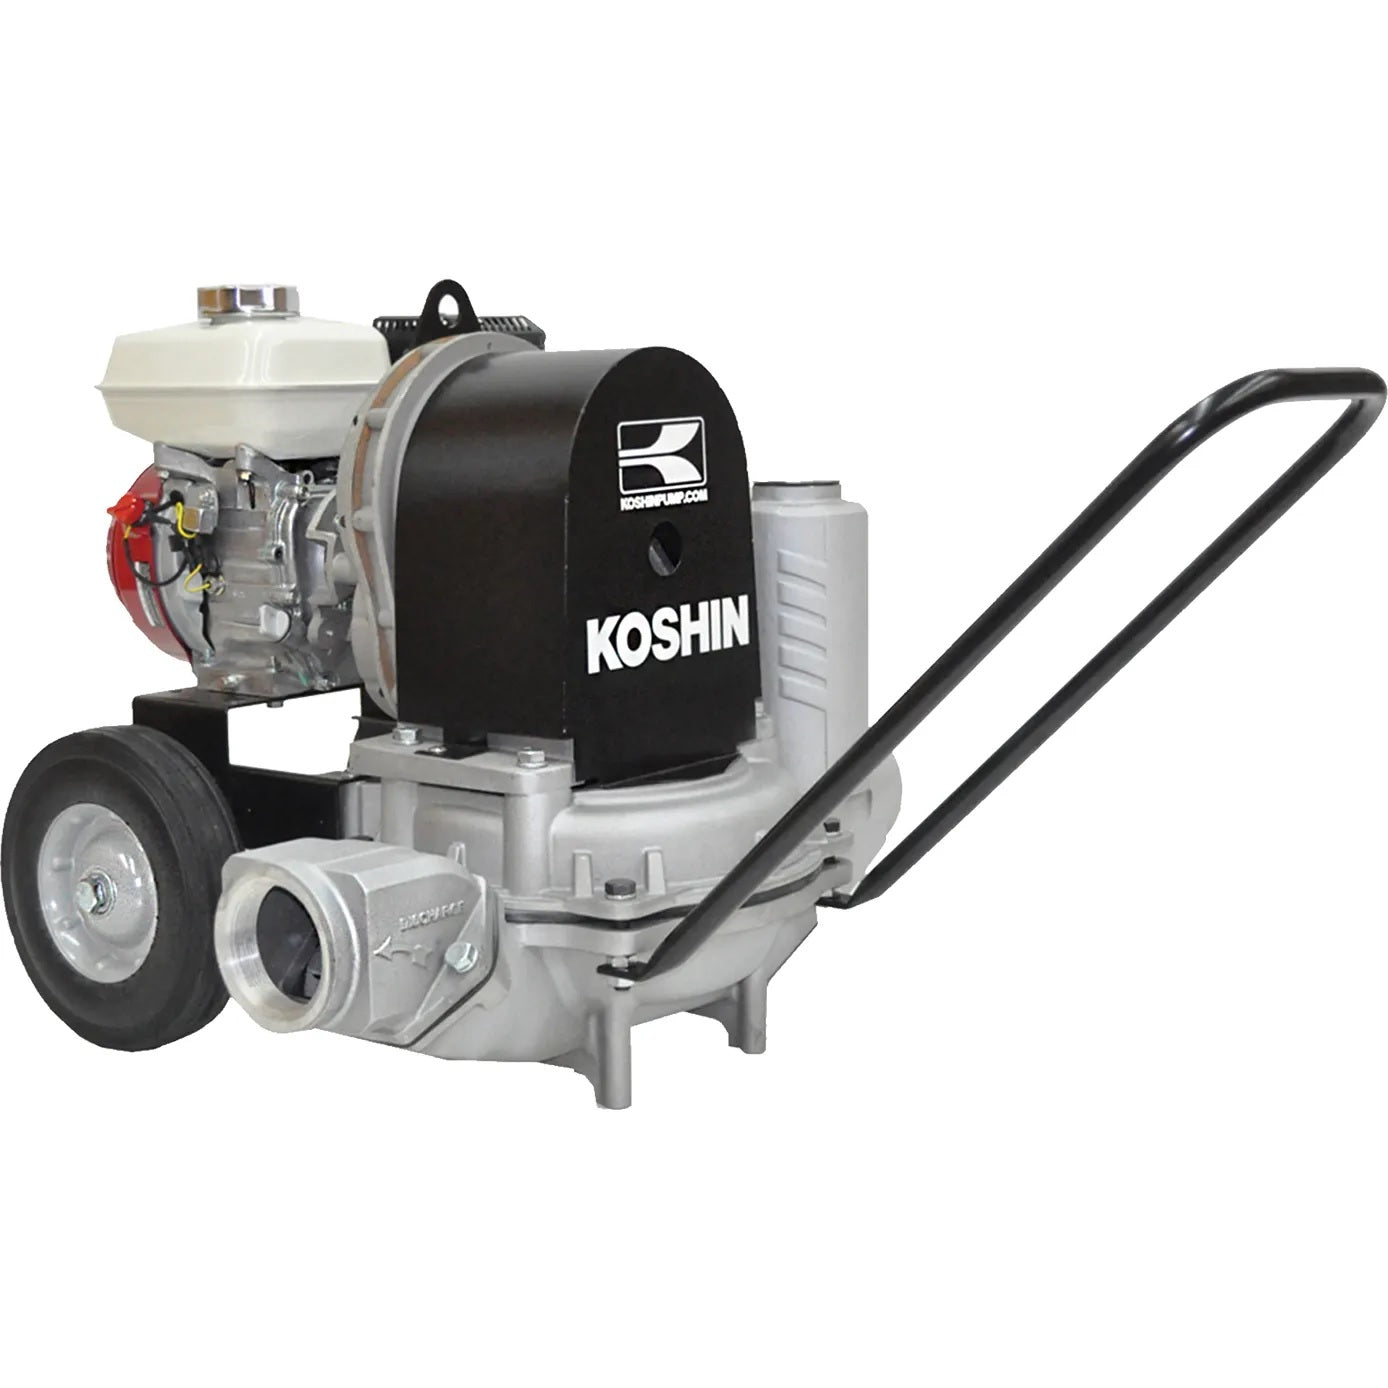 Koshin KDP-80X 3-Inch Diaphragm Pump with Honda GX120 Gas Engine and Wheel Kit | 88 GPM